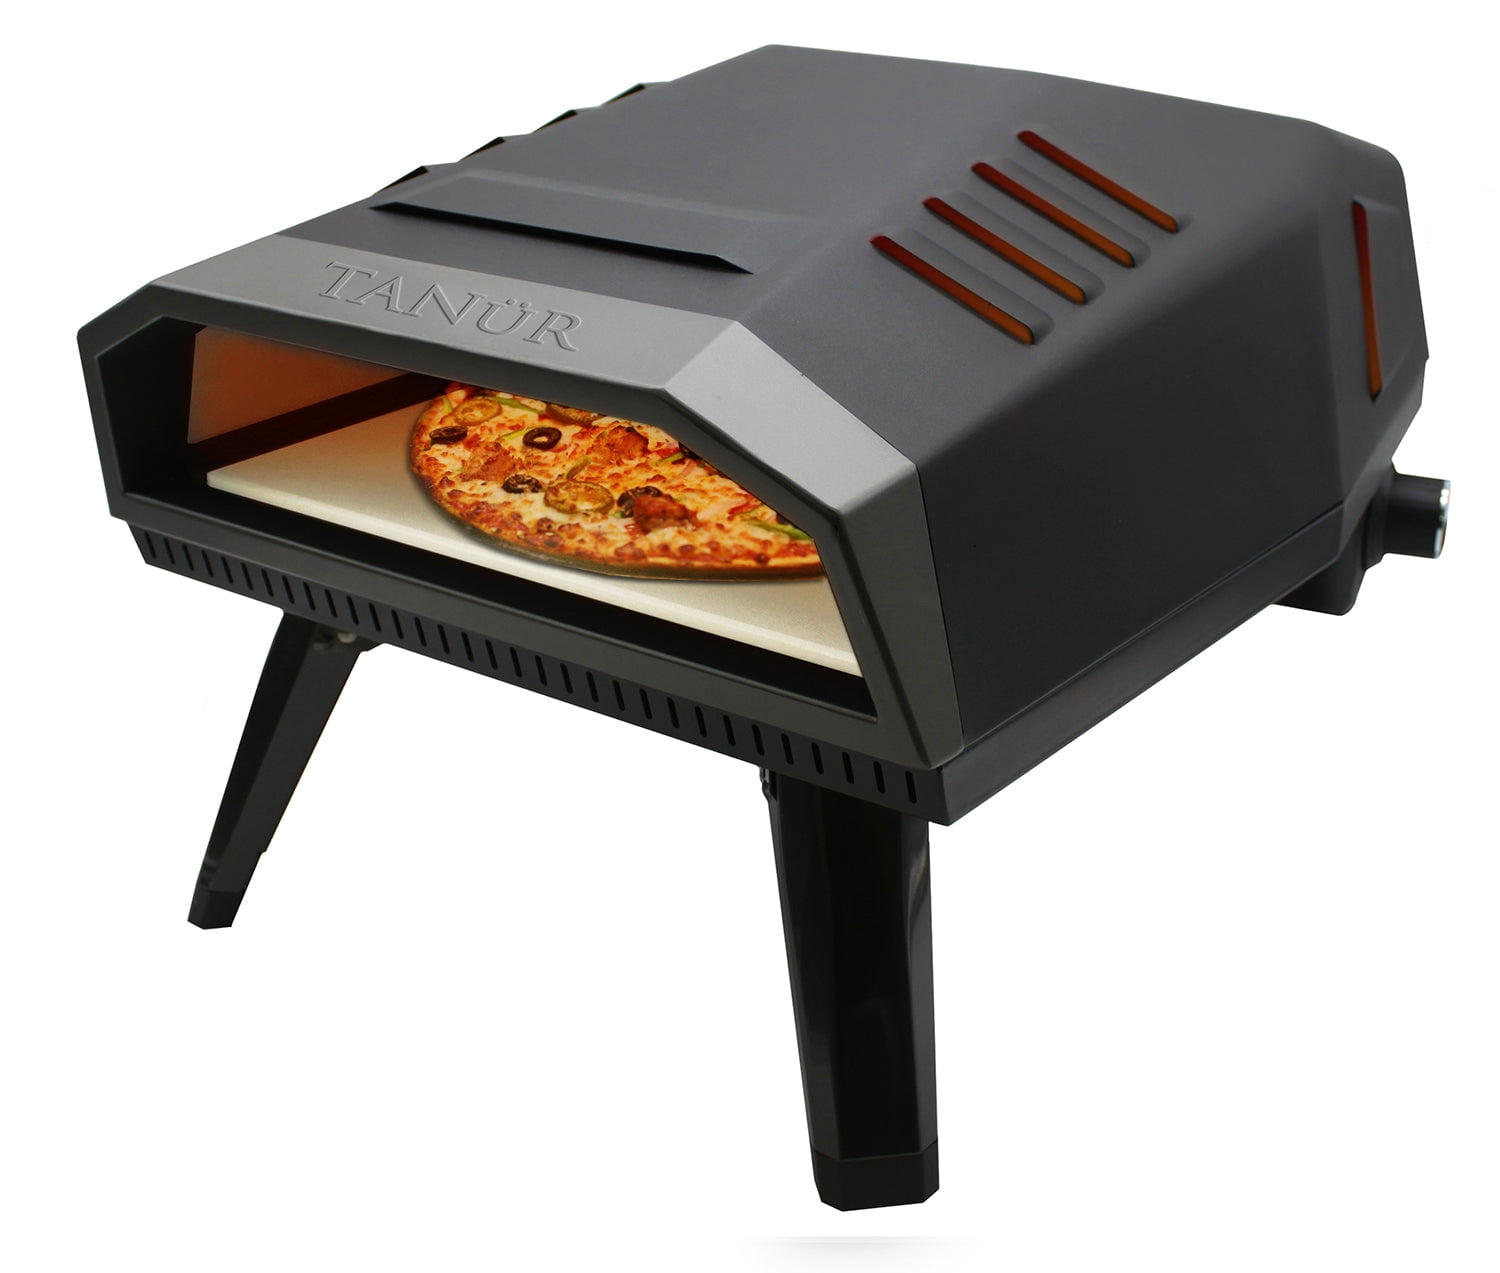 Flame King TANUR 12-inch Portable Outdoor Propane Pizza Oven Countertop Non-Stick Pizza Stone